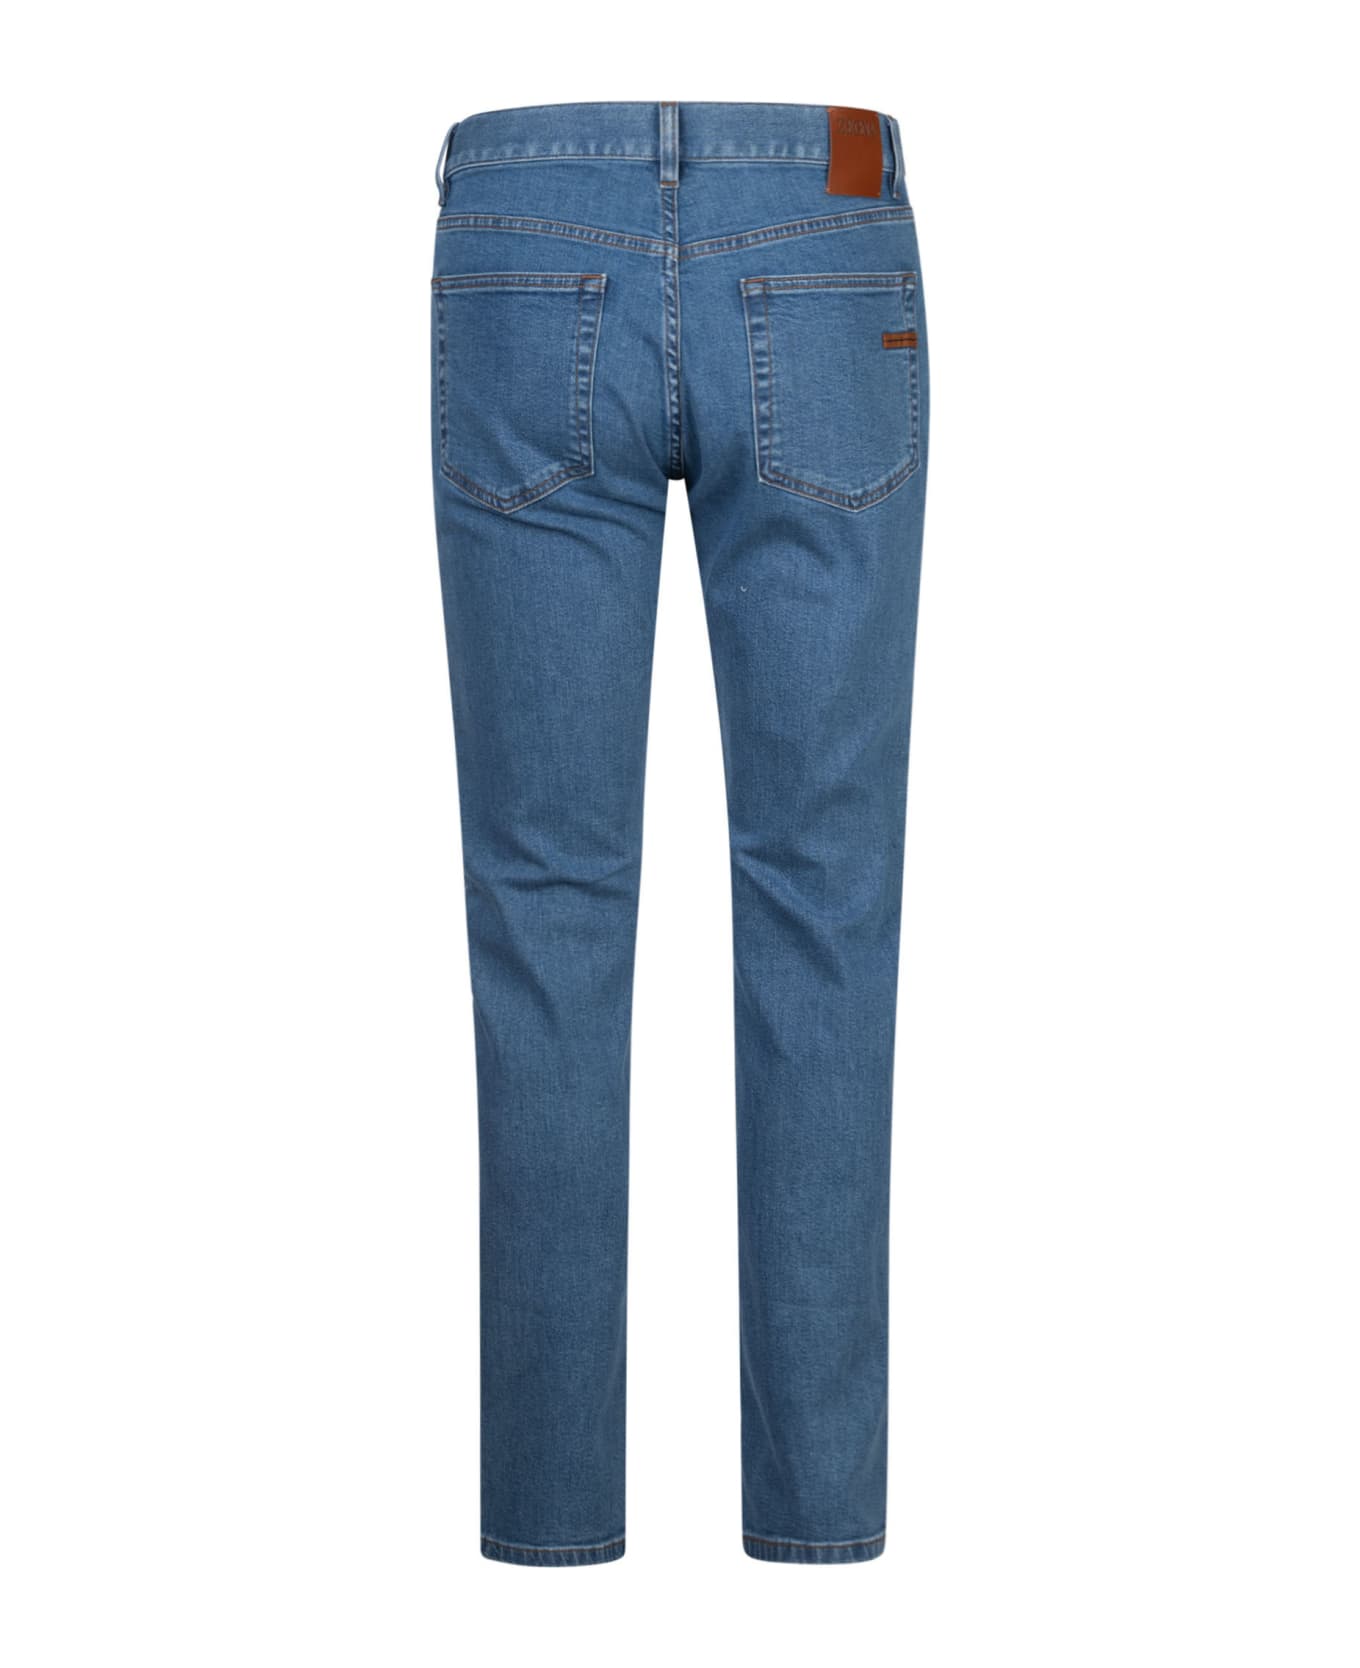 Zegna Classic 5 Pockets Jeans - Denim デニム